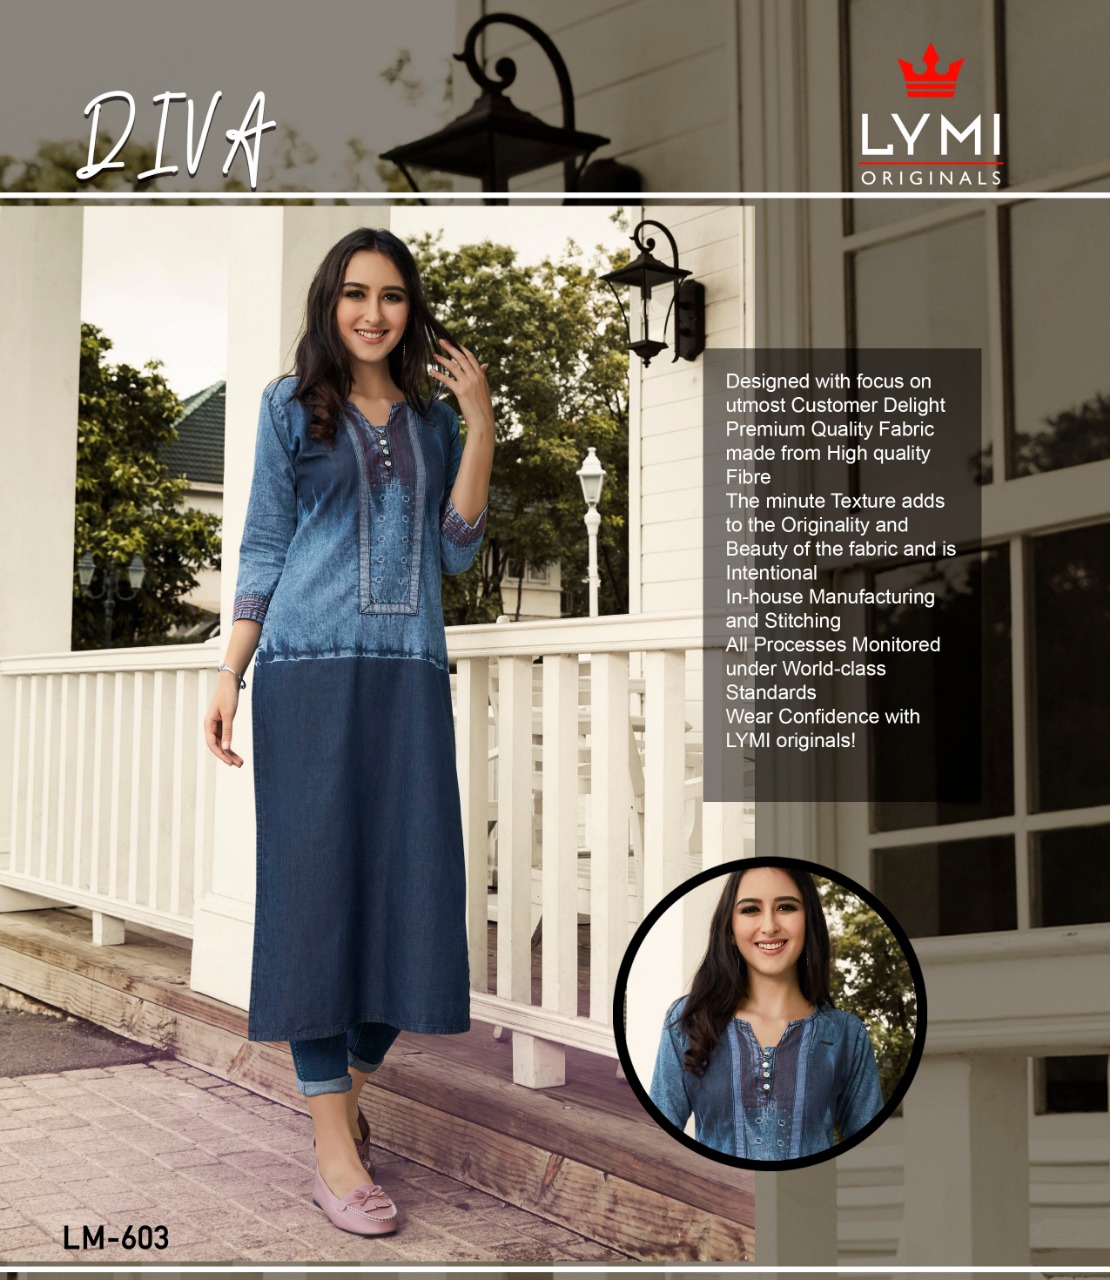 Lymi originals present diva denim style kurties collection